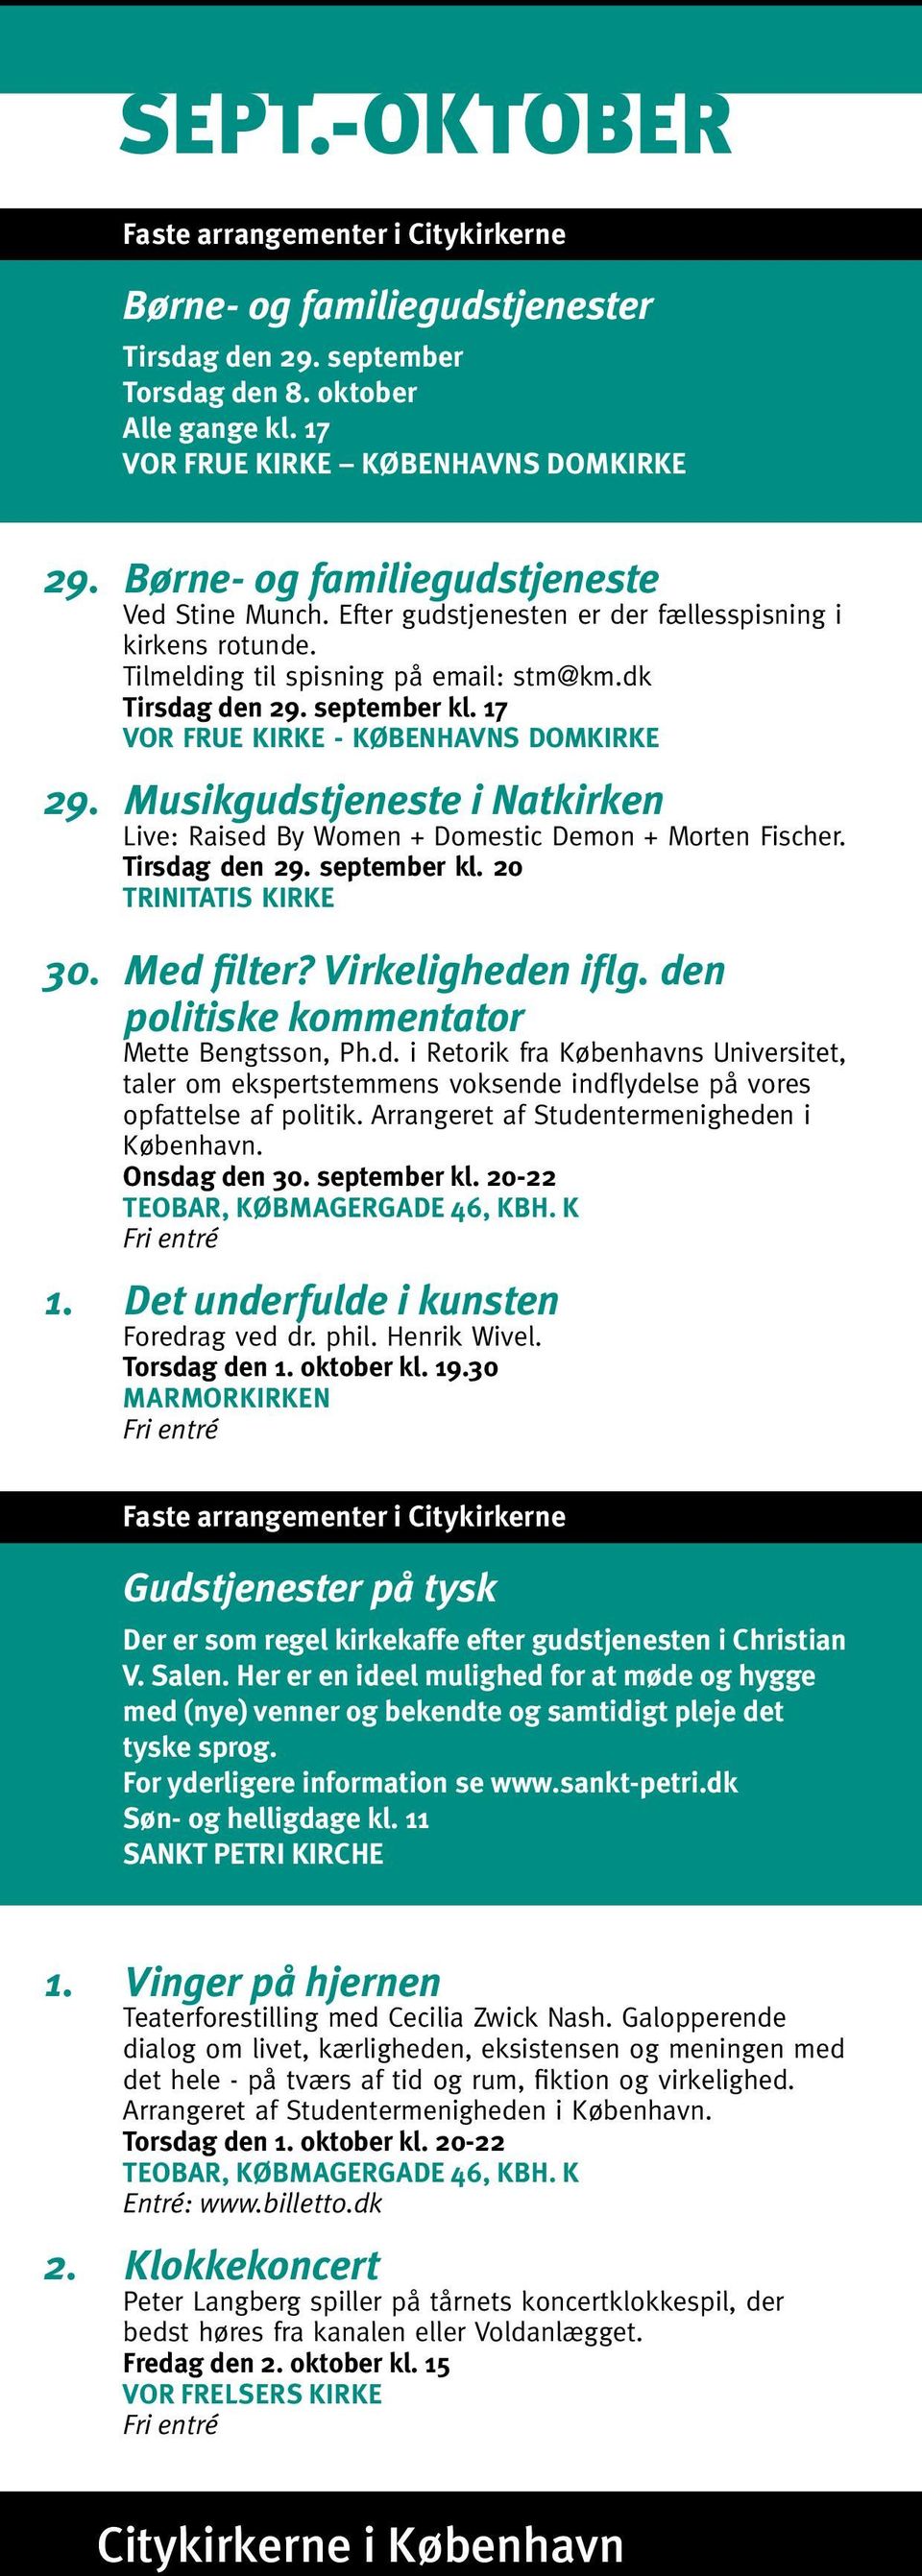 Musikgudstjeneste i Natkirken Live: Raised By Women + Domestic Demon + Morten Fischer. Tirsdag den 29. september kl. 20 30. Med filter? Virkeligheden iflg.